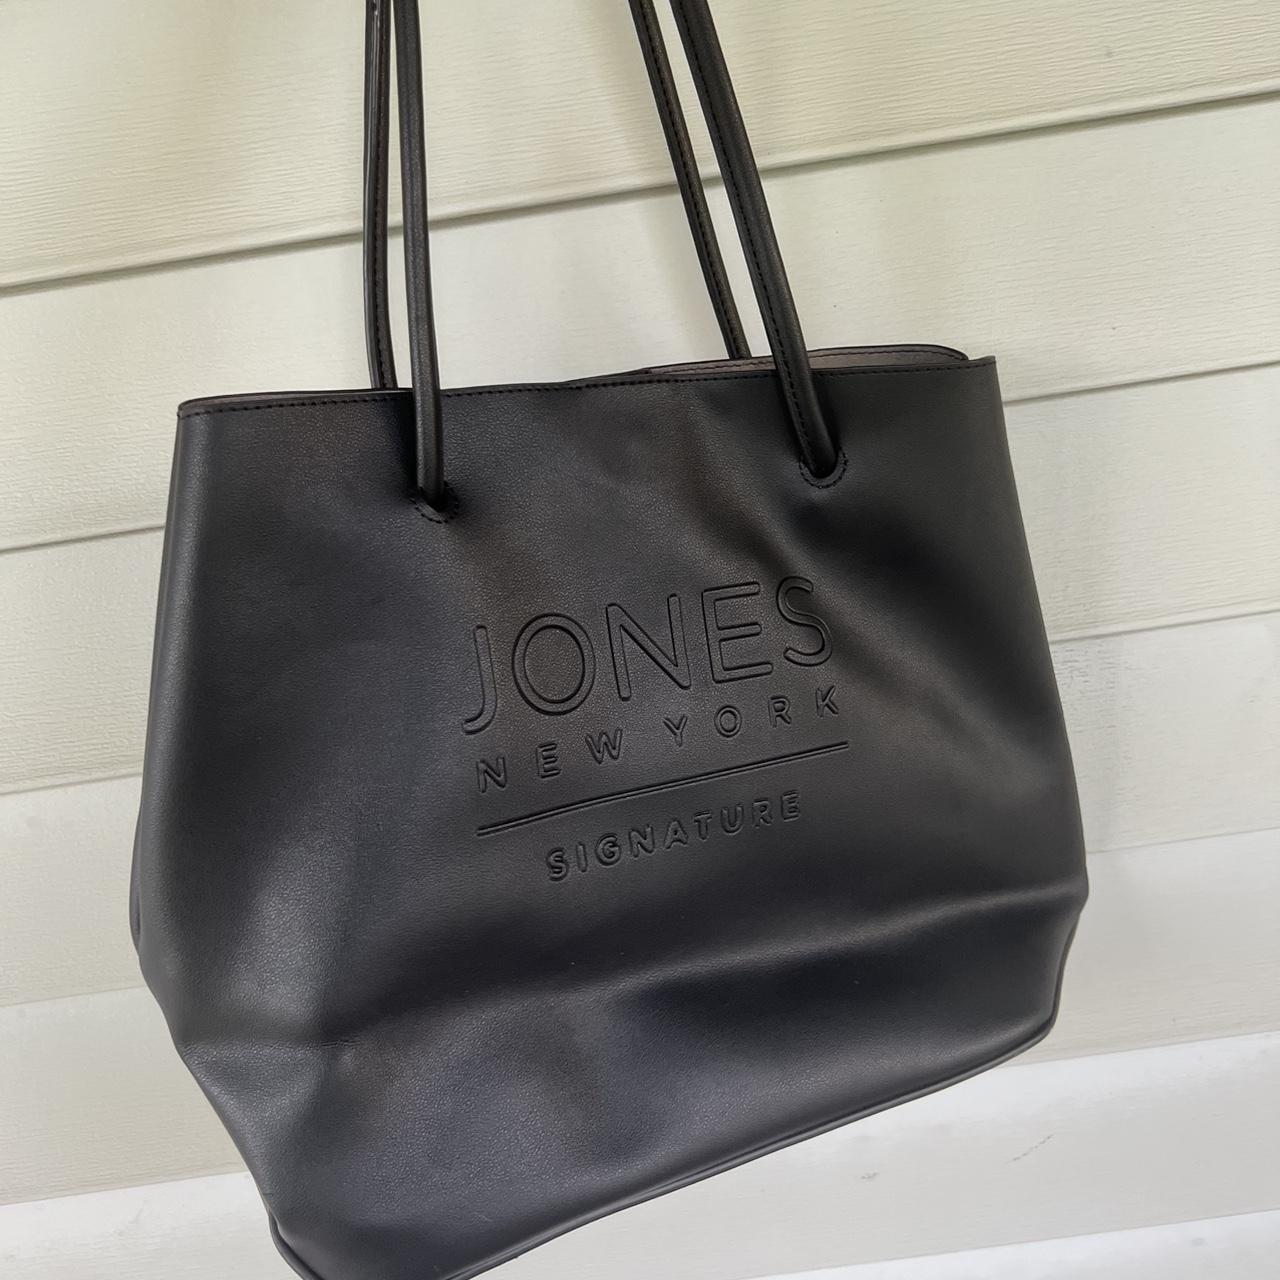 Genuine Leather Jones New York Tan Purse Handbag with Credit Card Holder |  eBay